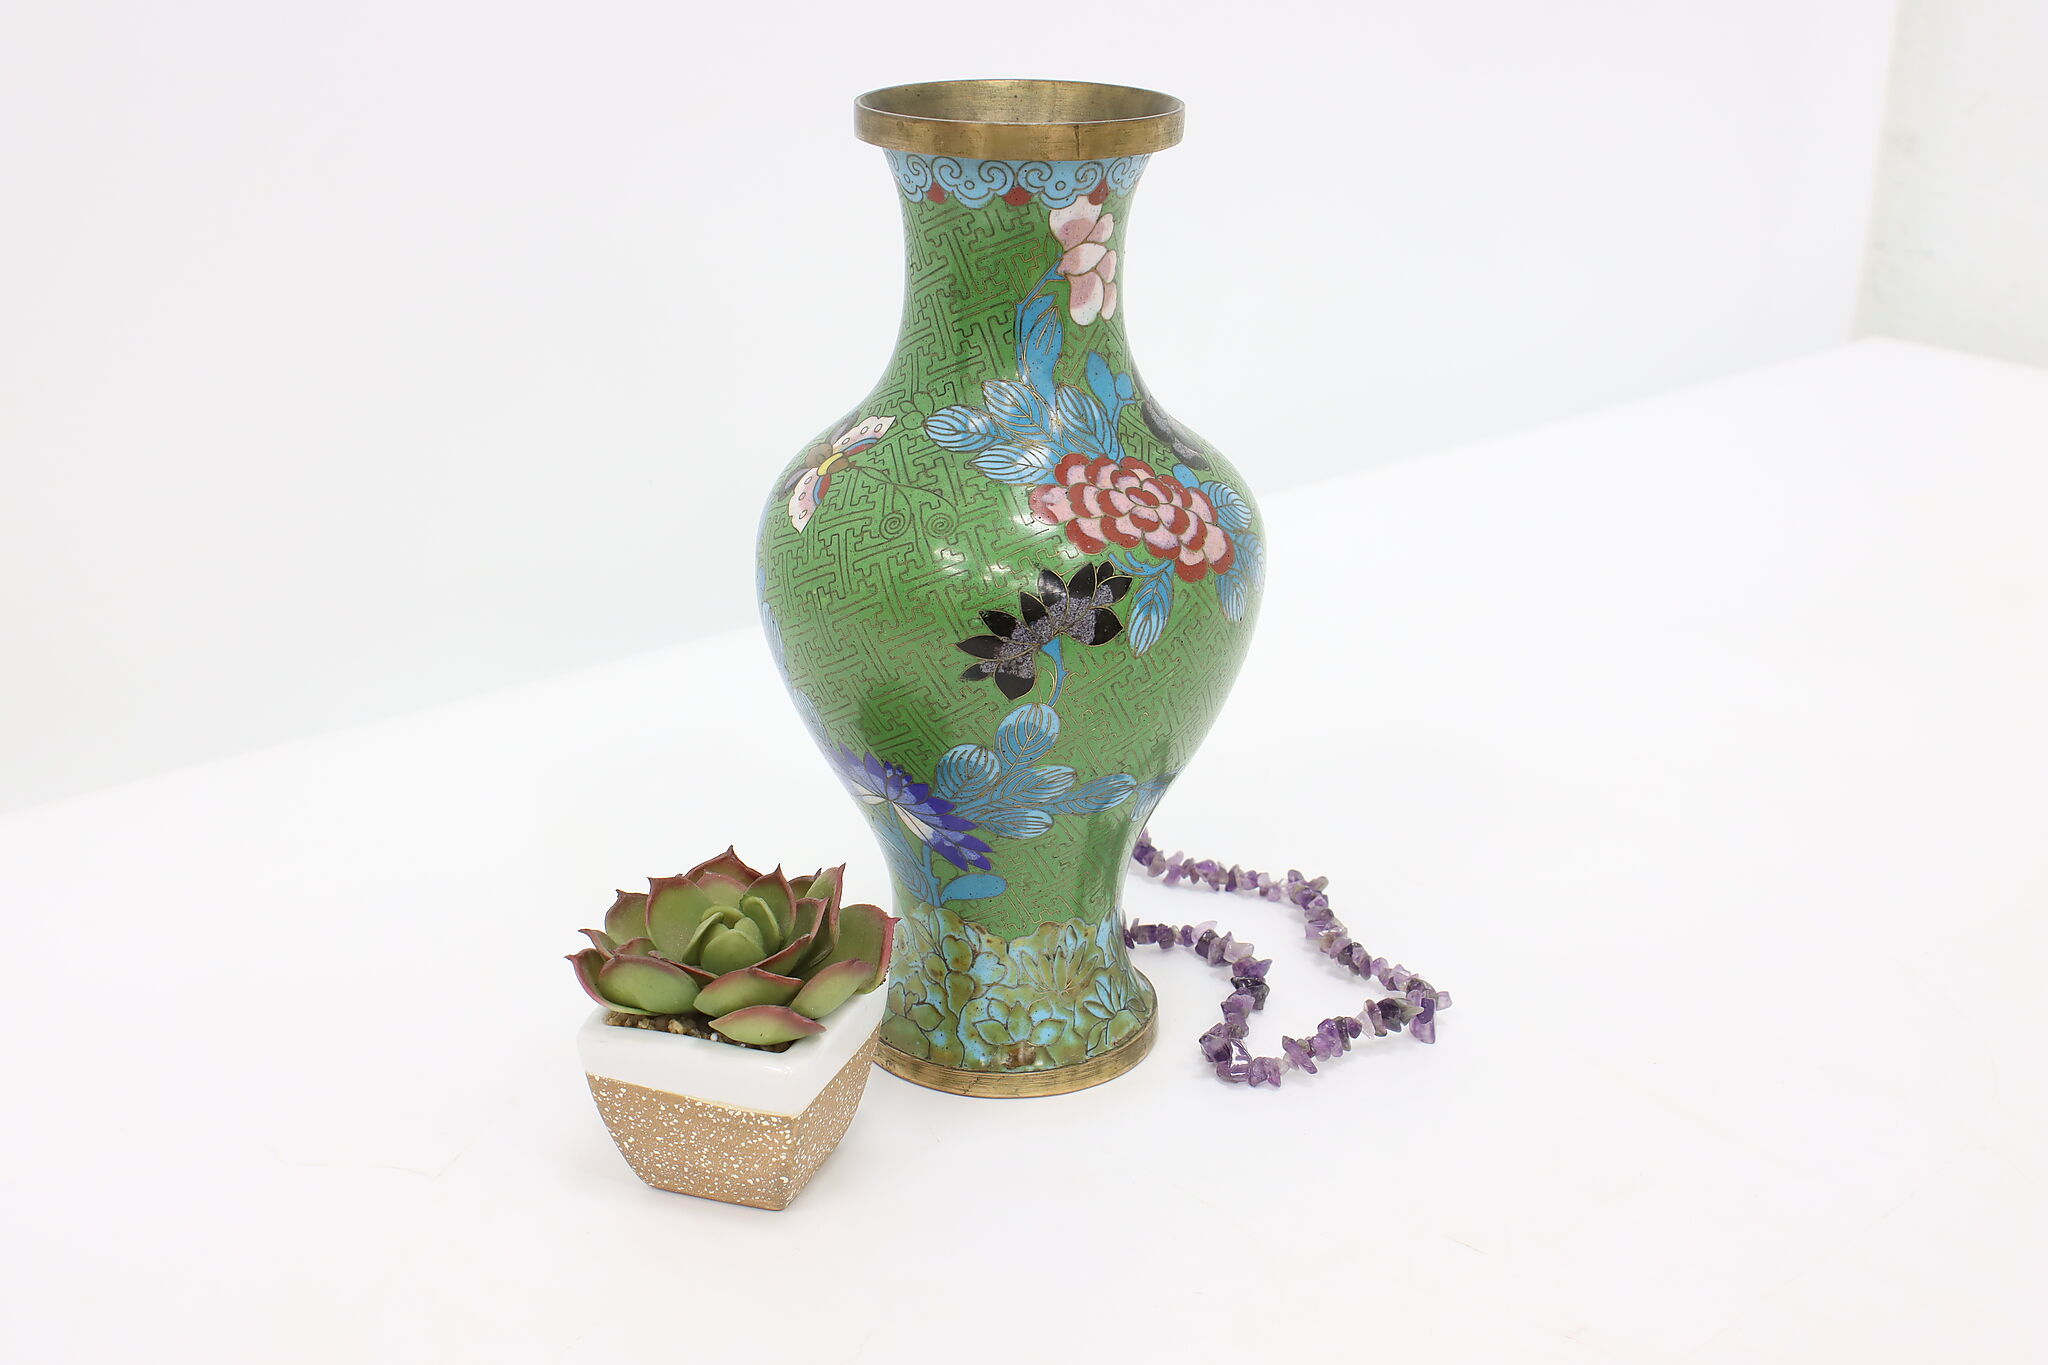 Chinese Cloisonne Traditional Vintage Inlaid Enamel Vase, Flowers